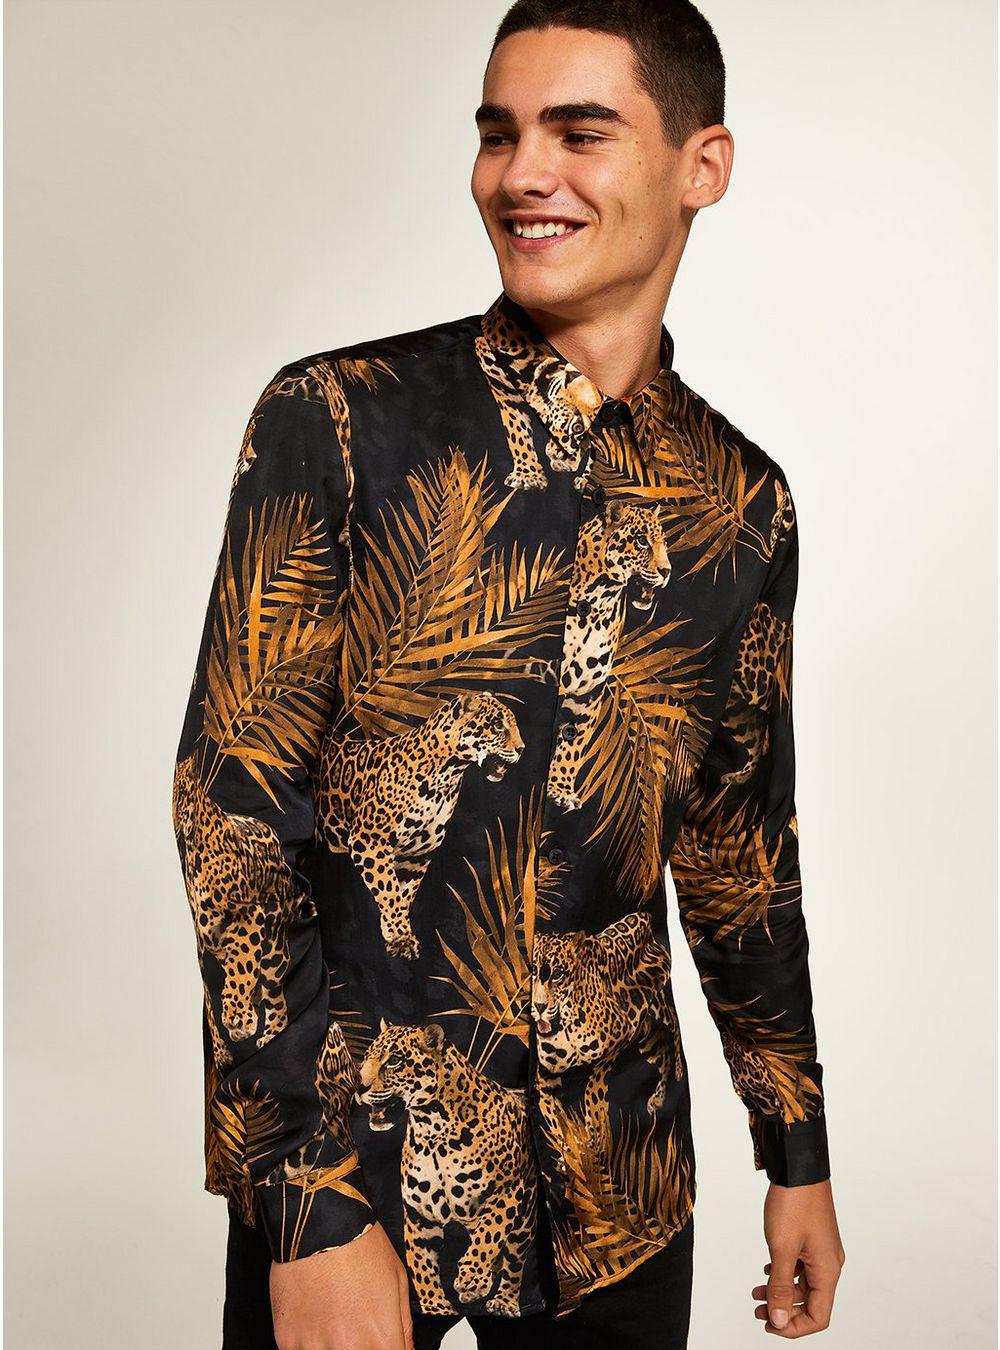 TOPMAN Synthetic Premium Leopard Slim Smart Shirt in Black for Men - Lyst